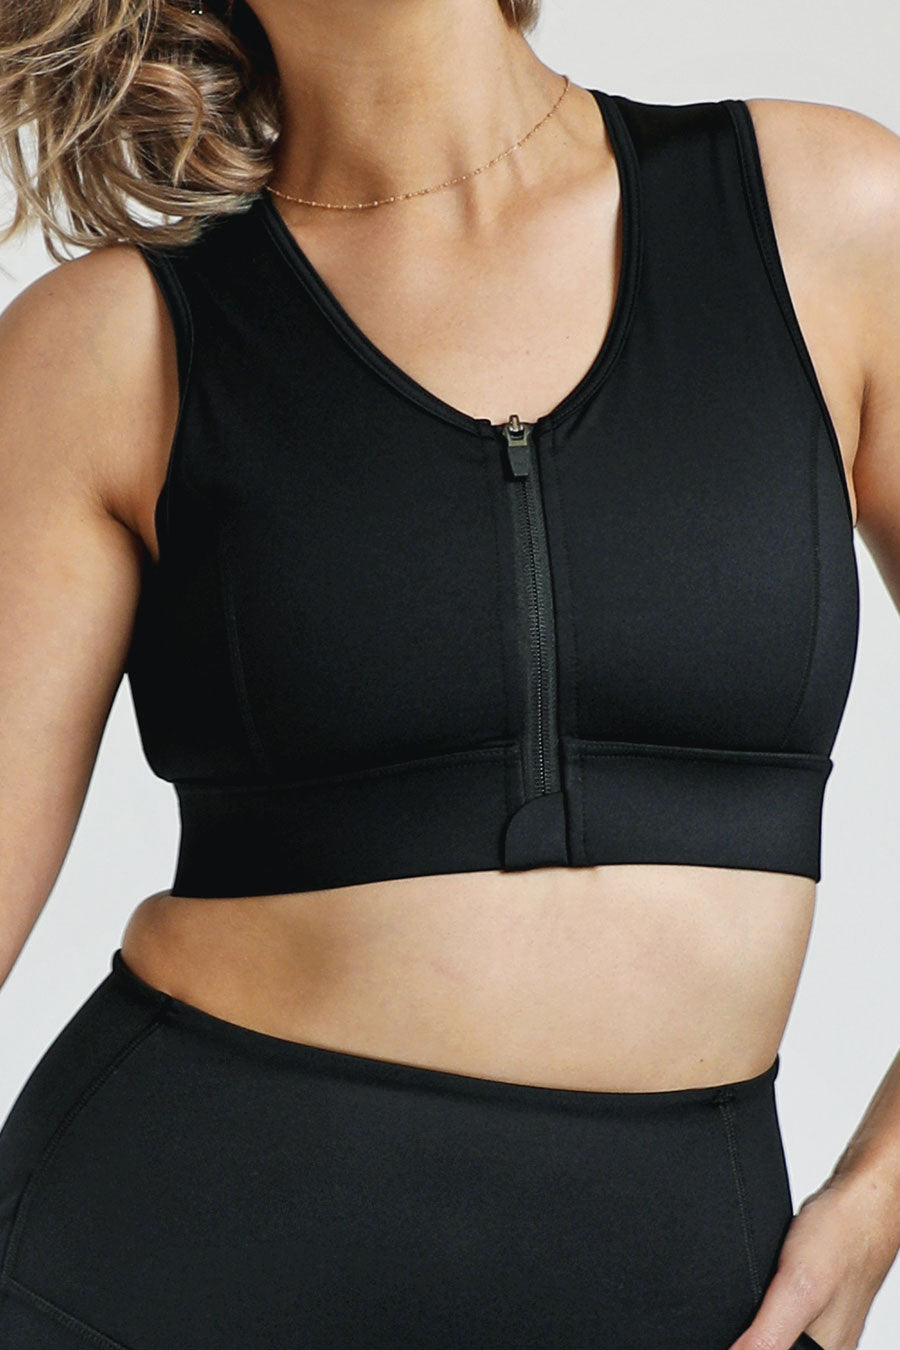 Women's Sports Bras Tights Crop Top Yoga Vest Front Zipper Plus